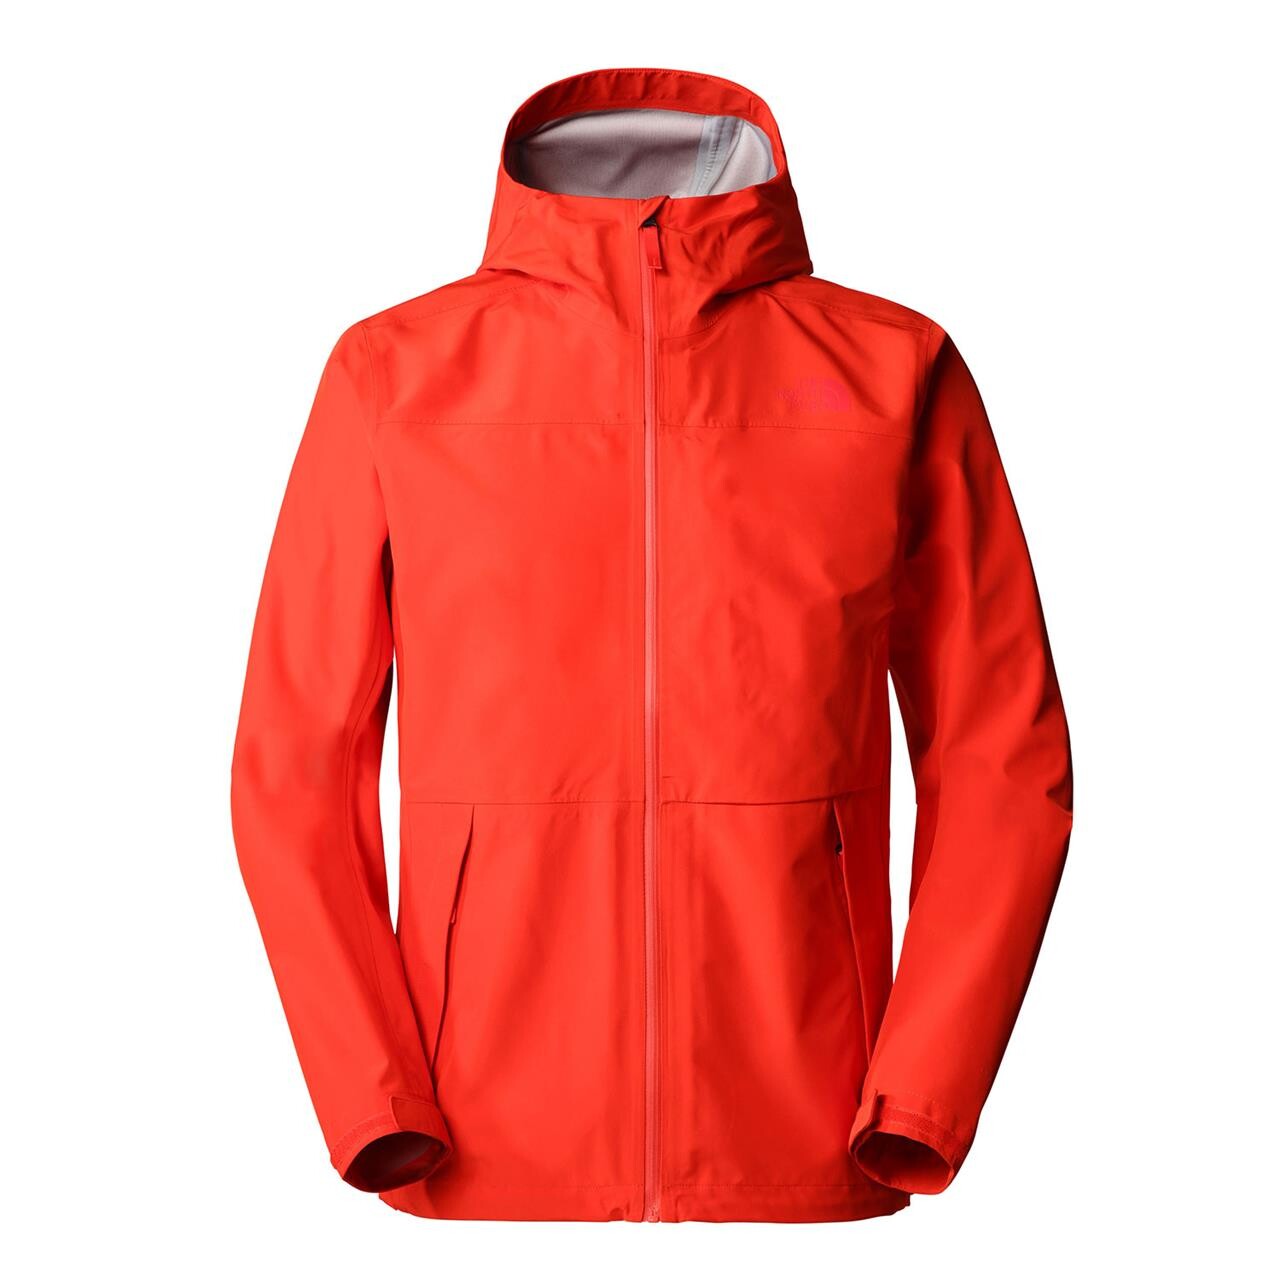 Se The North Face Mens Dryzzle Futurelight Jacket (Rød (FIERY RED) X-large) hos Friluftsland.dk